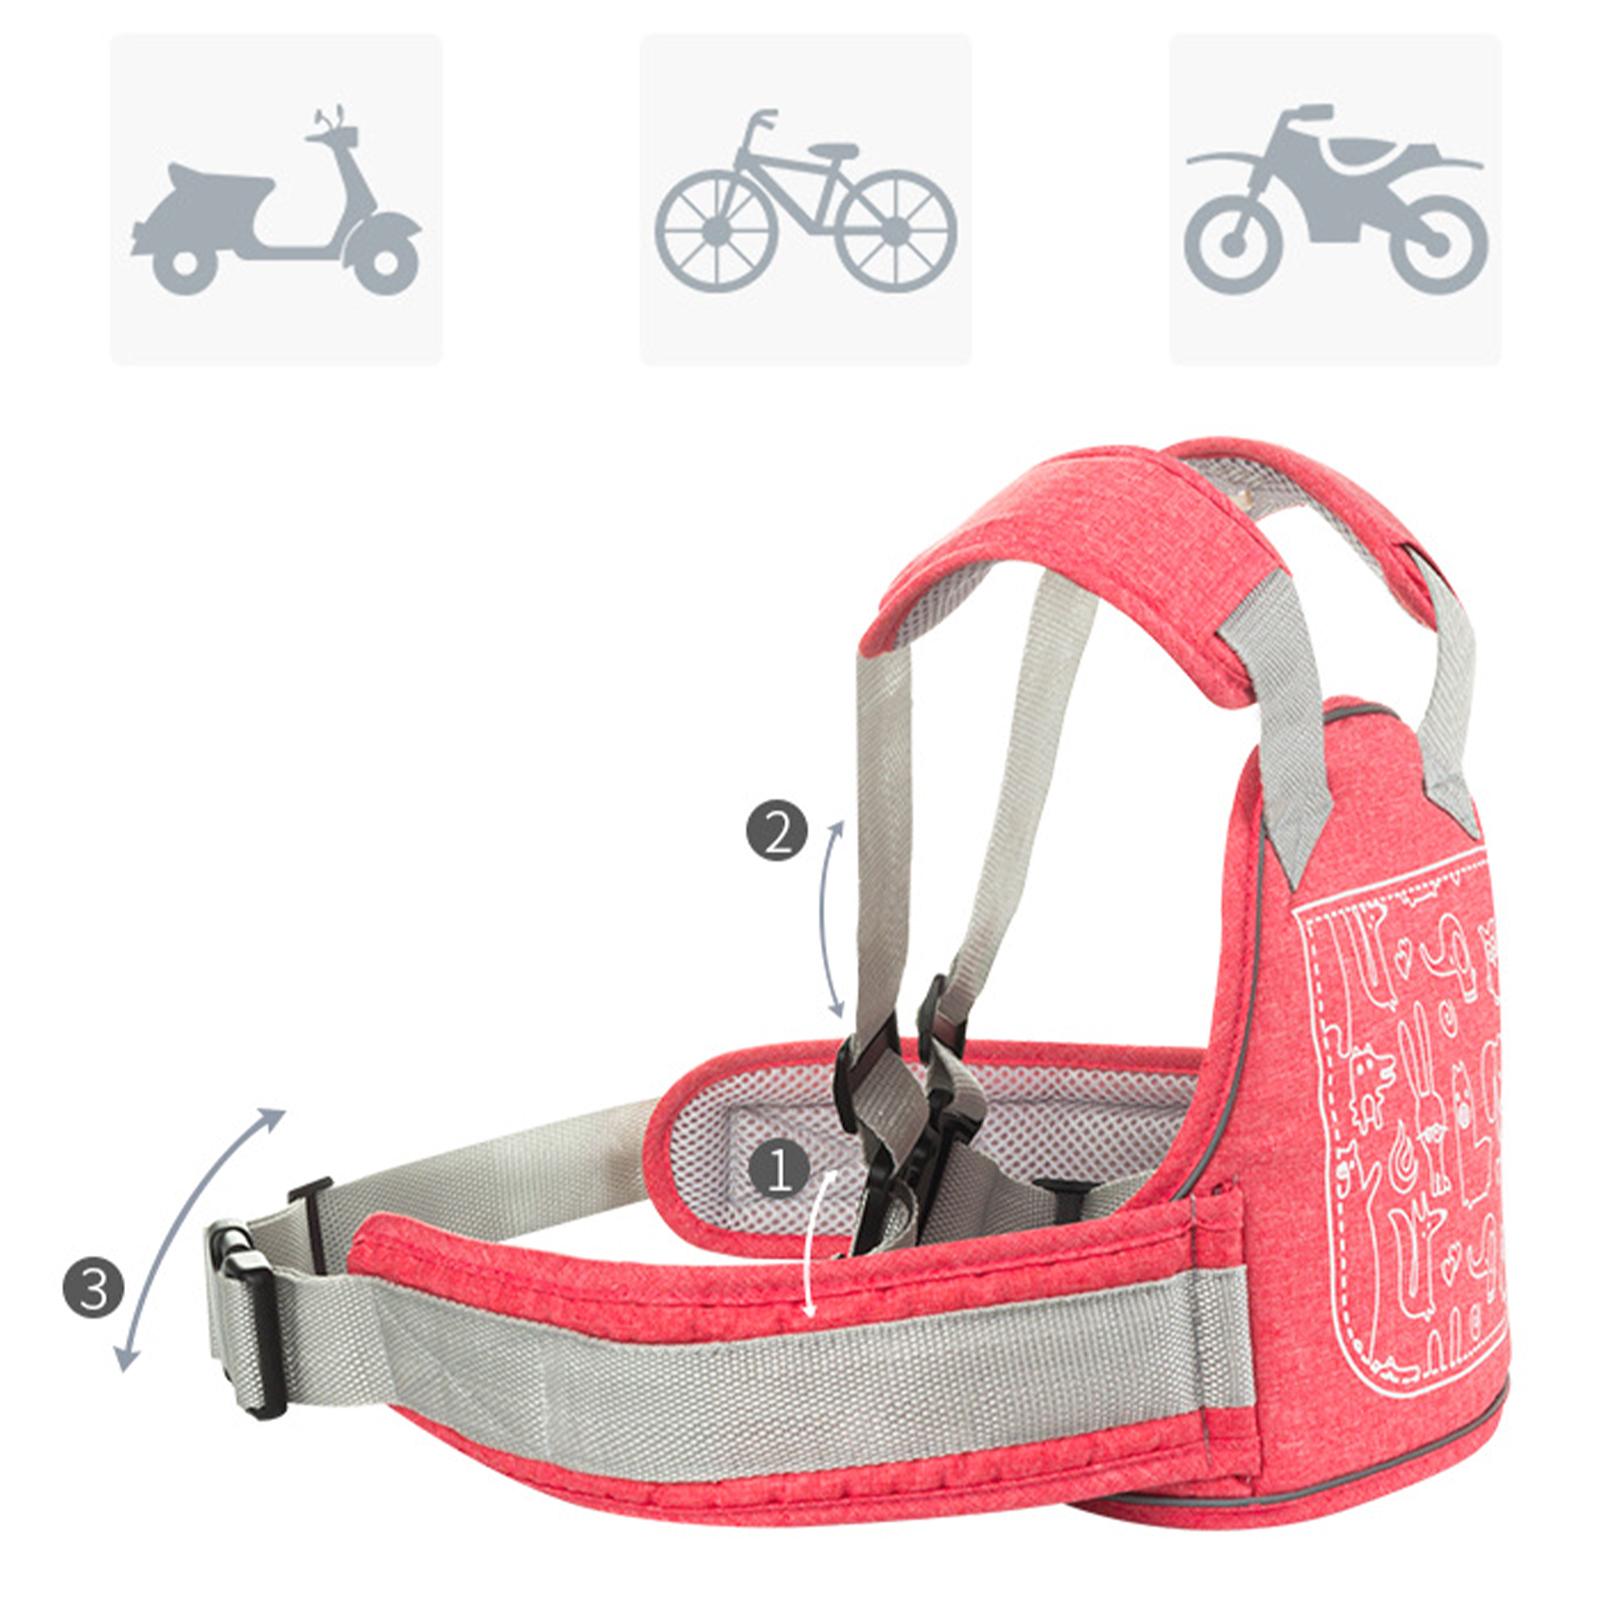 Motorcycle Children Kids Safety Belt Bicycle Seat Harness Belt Pink